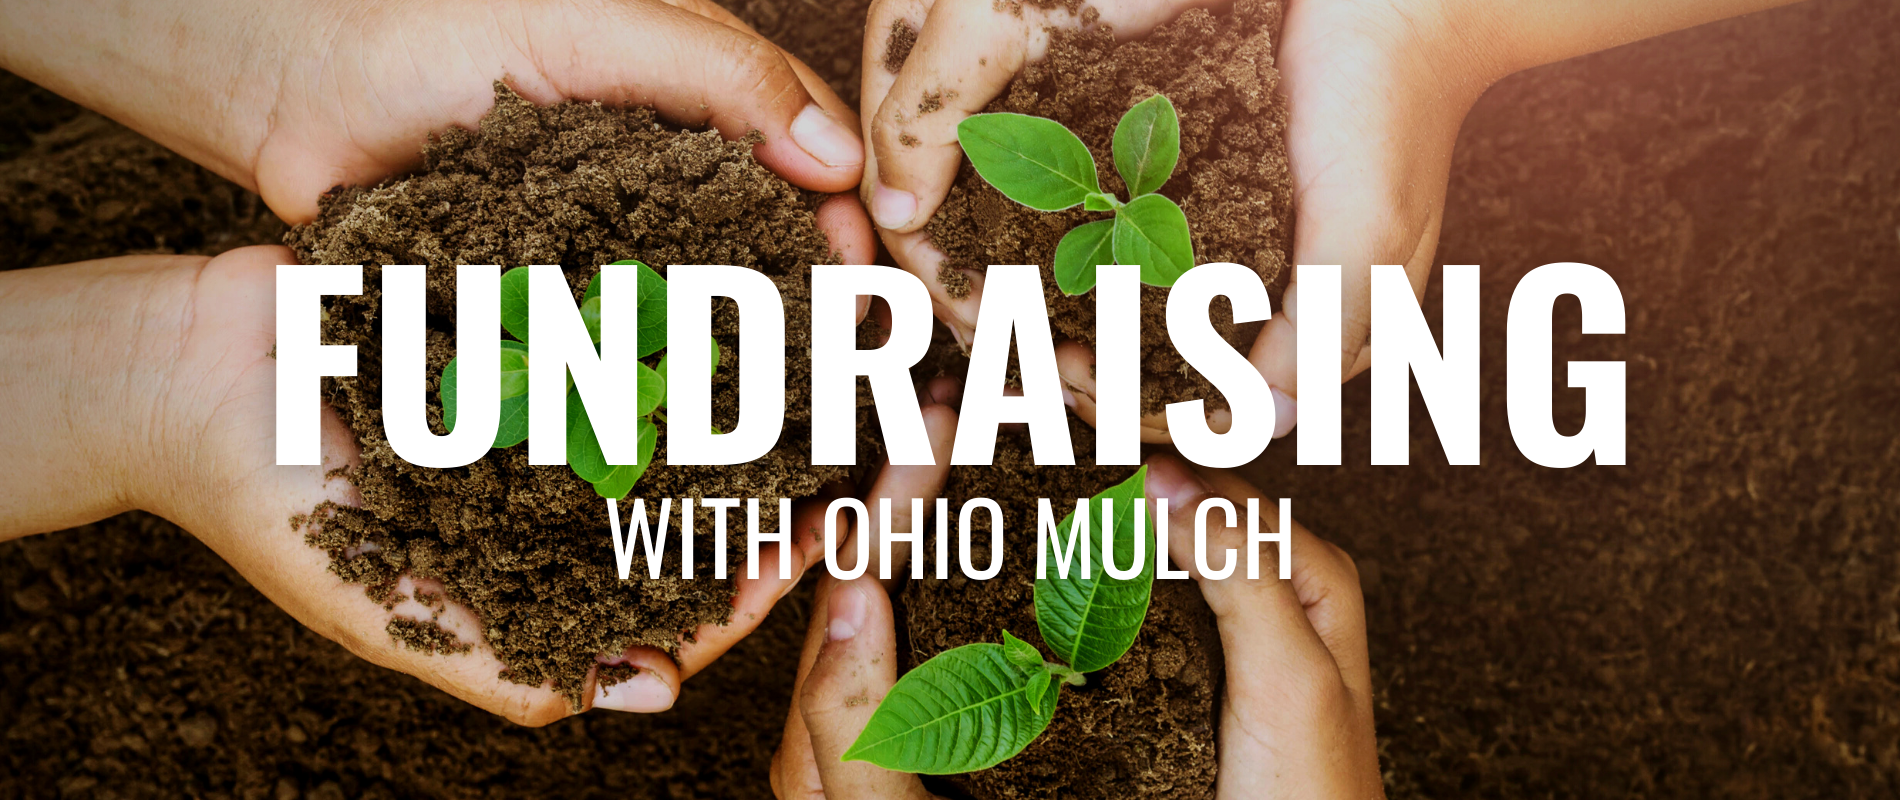 Ohio mulch website banners 3